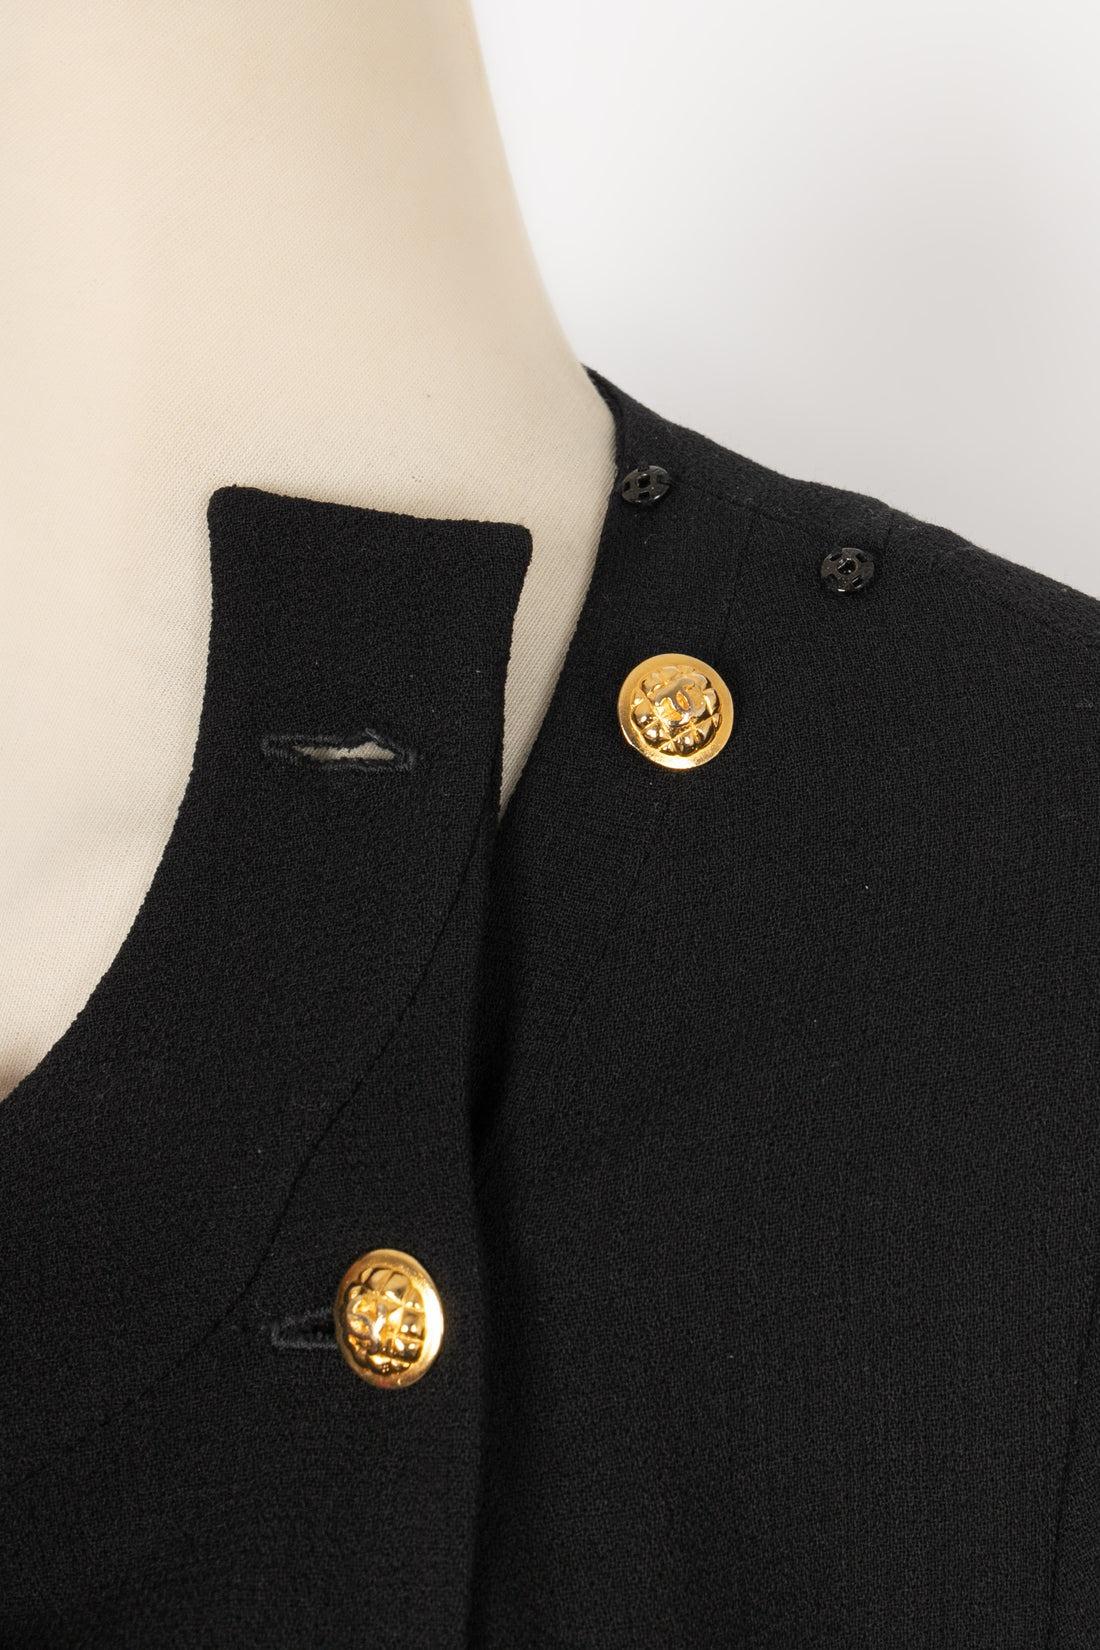 Chanel Long-Sleeved Black Dress, 1980S For Sale 1